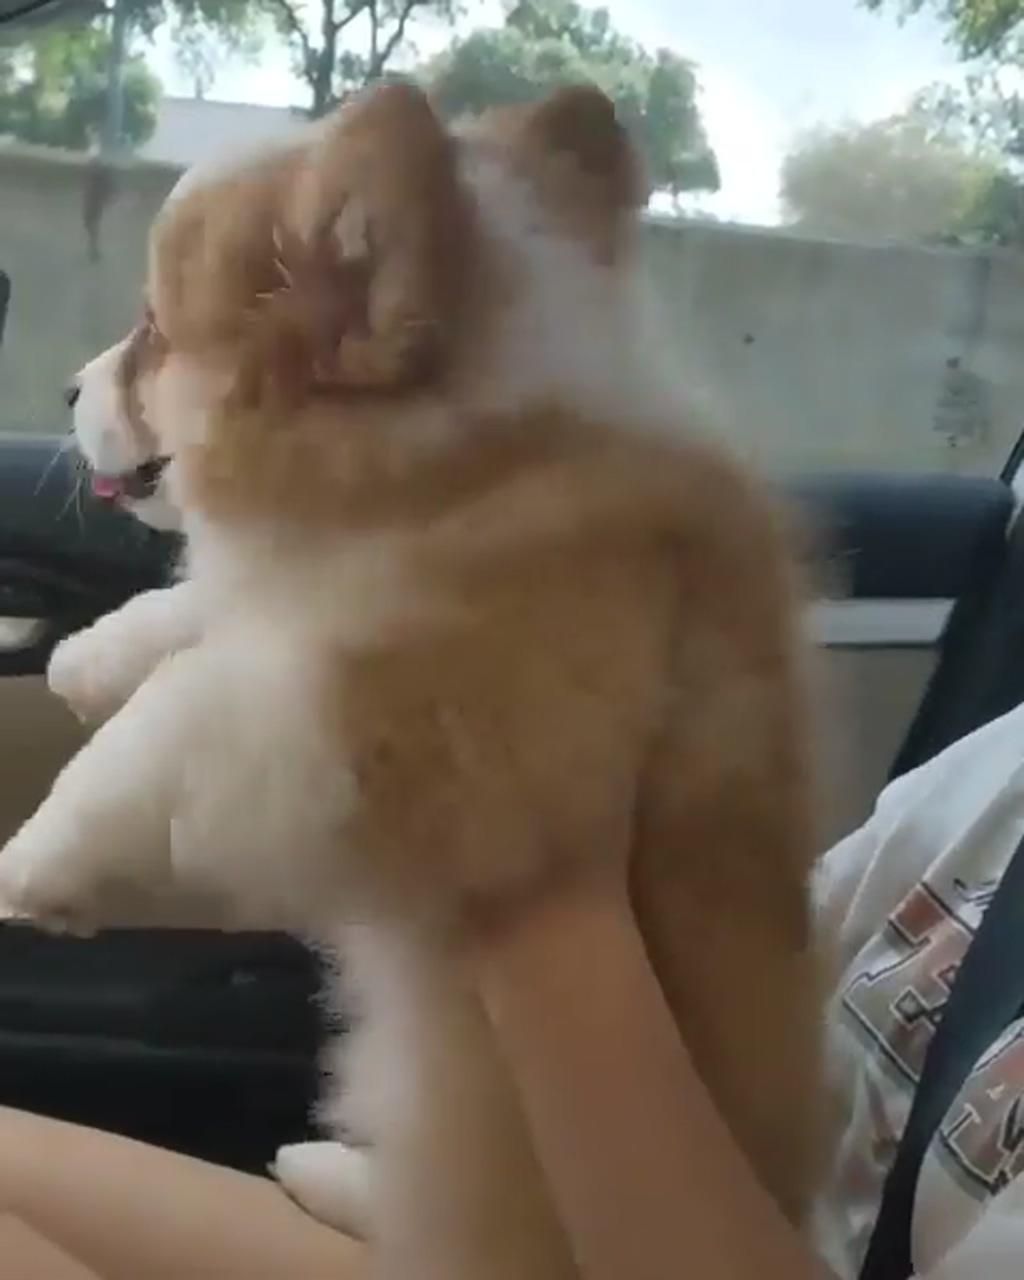 Let's go mom, i can't wait; cute corgi puppy